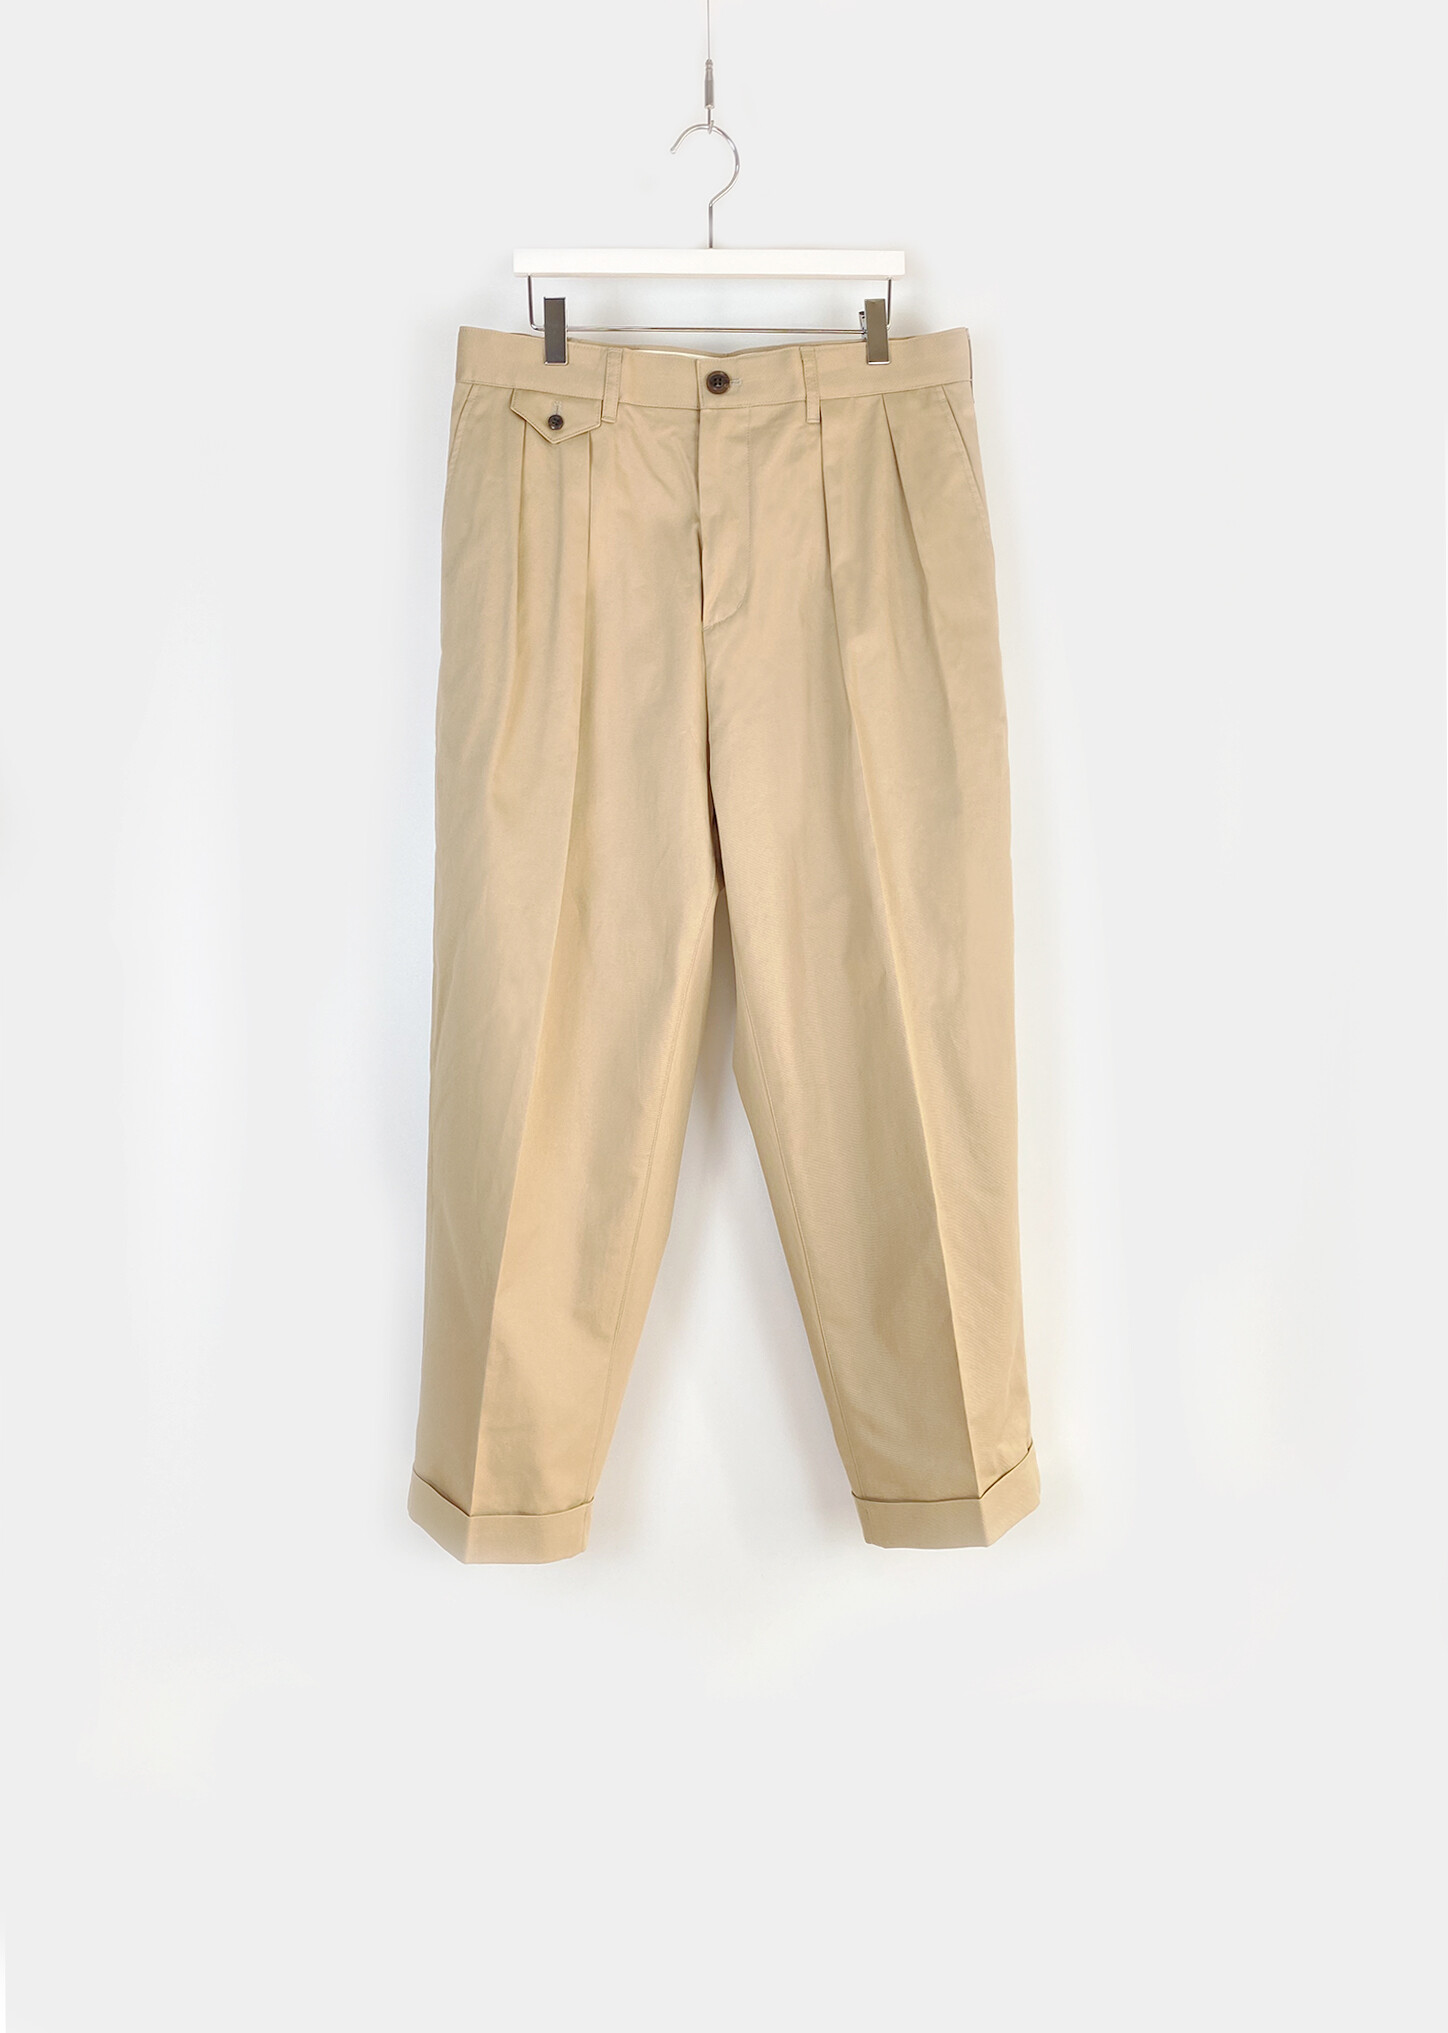 Unaltd pants #1 beige